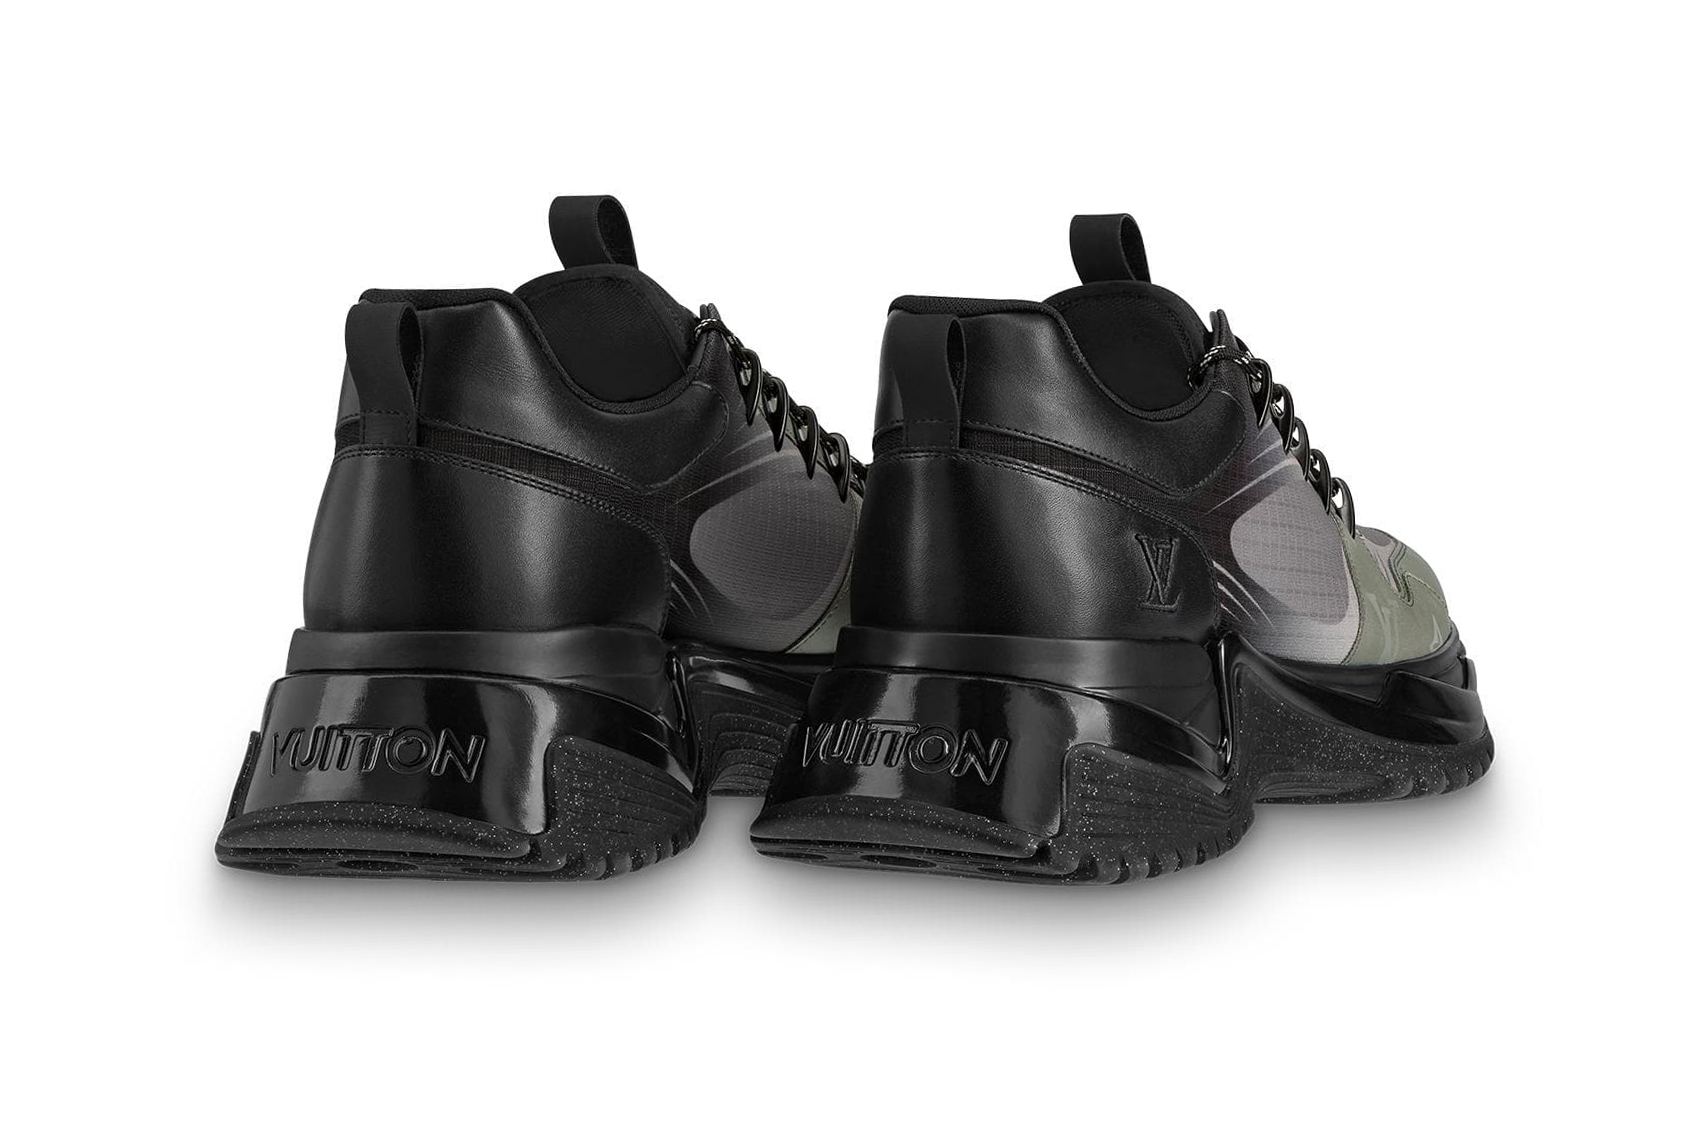 Louis Vuitton Run Away Pulse Monogram Sneaker